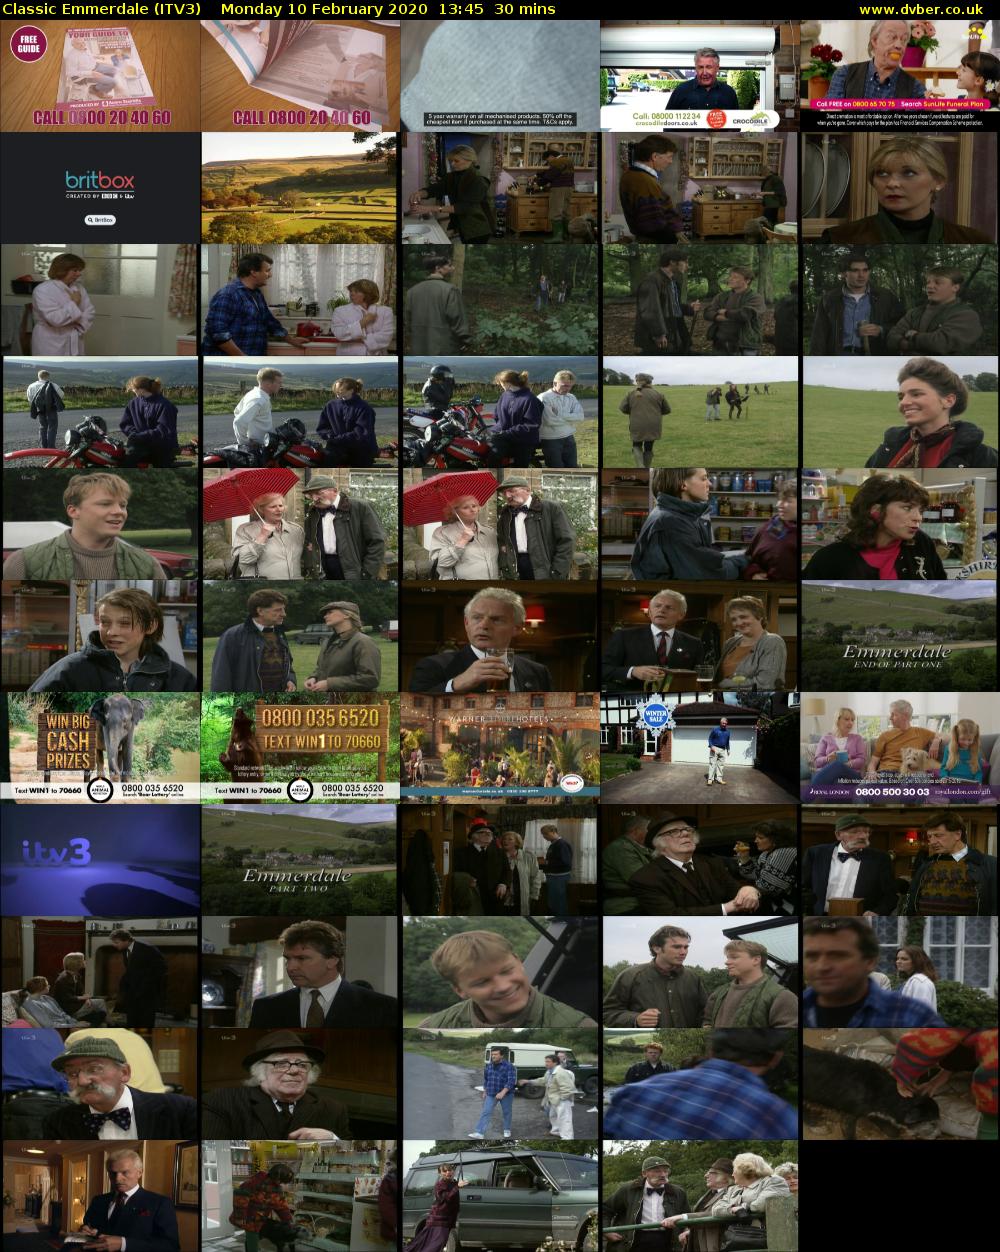 Classic Emmerdale (ITV3) Monday 10 February 2020 13:45 - 14:15